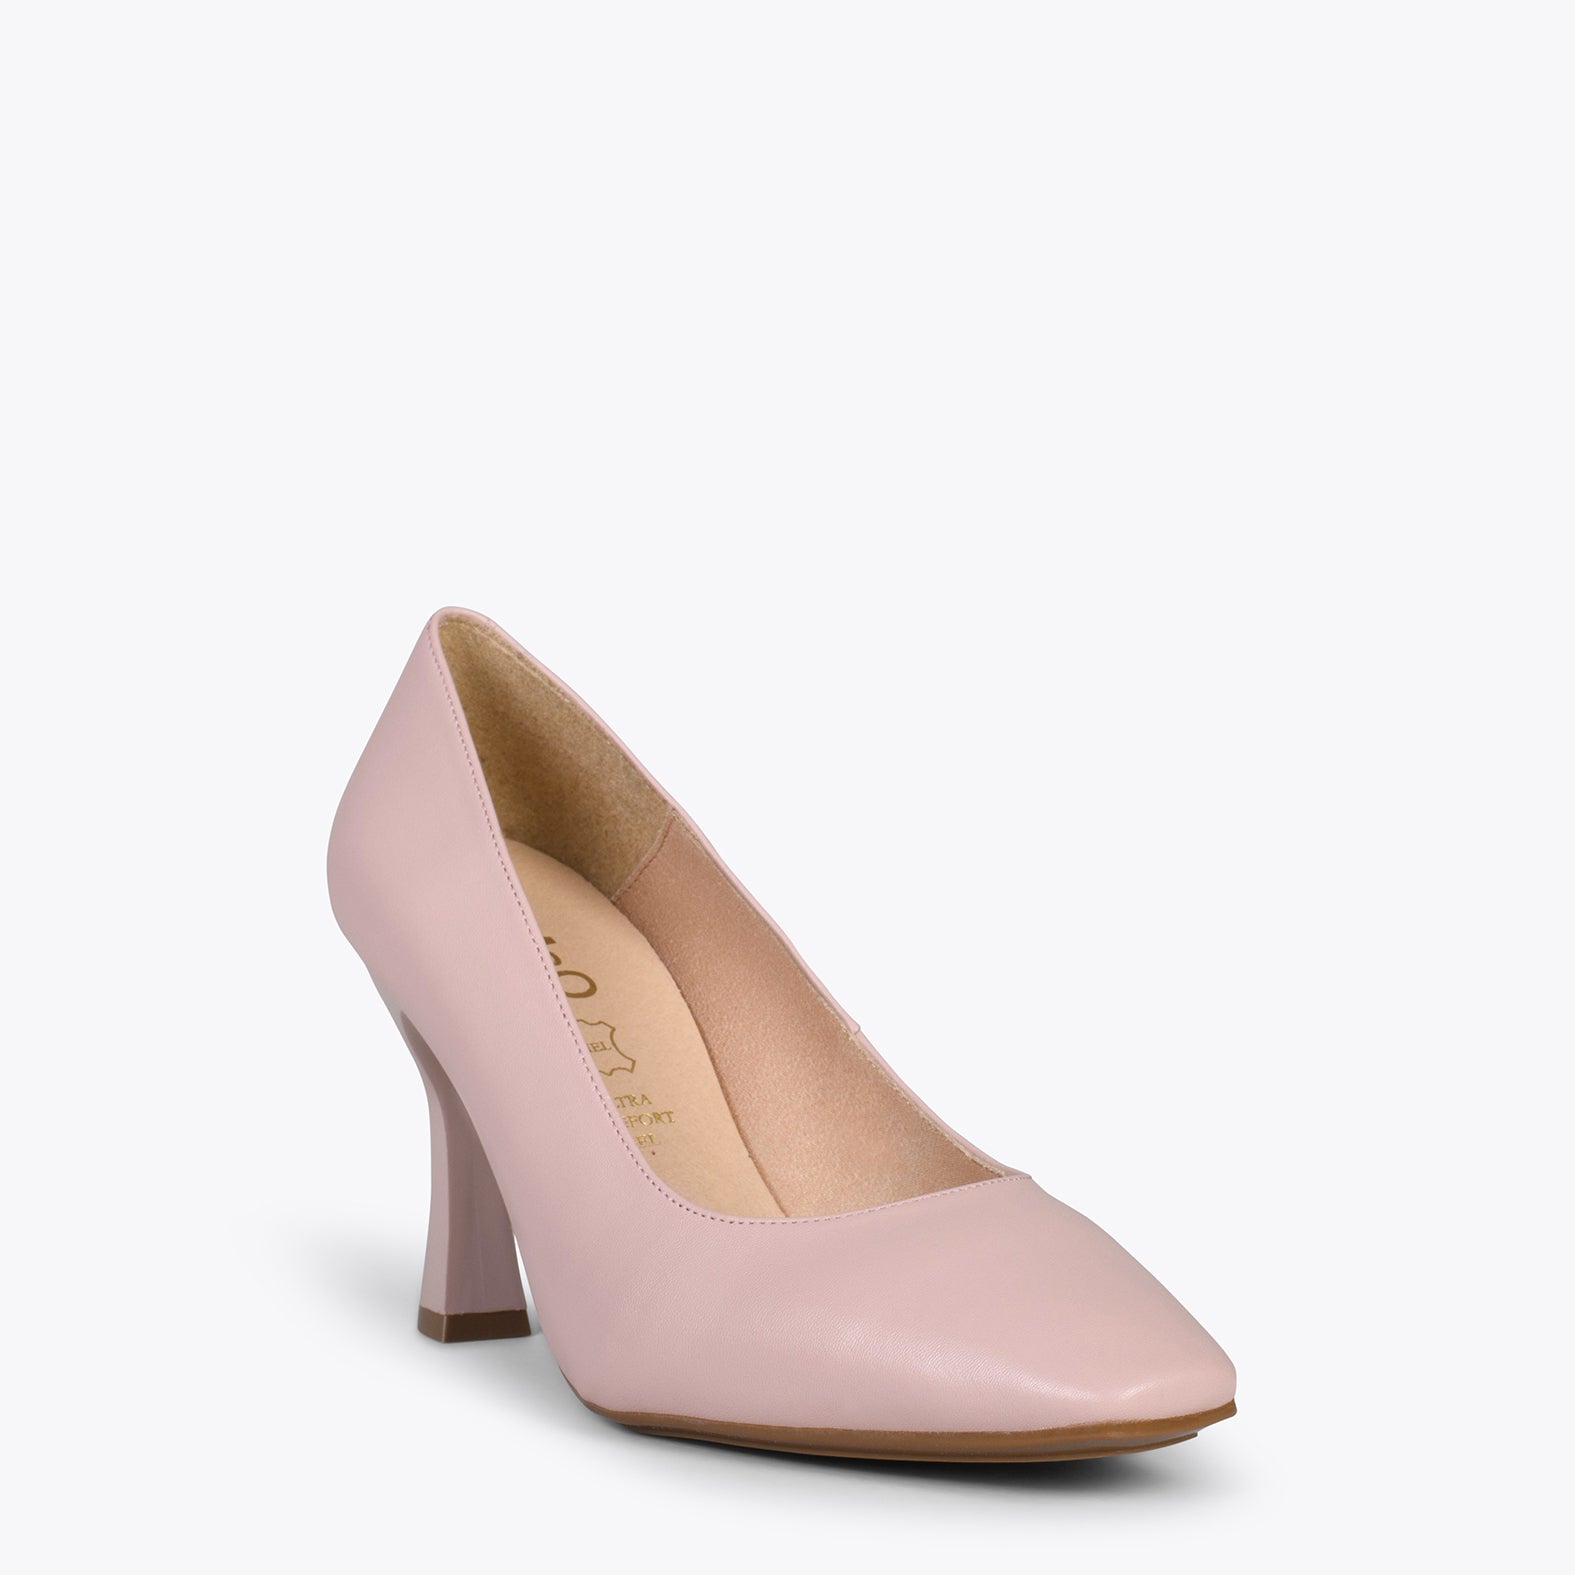 URBAN GLAM – NUDE bell shaped heel